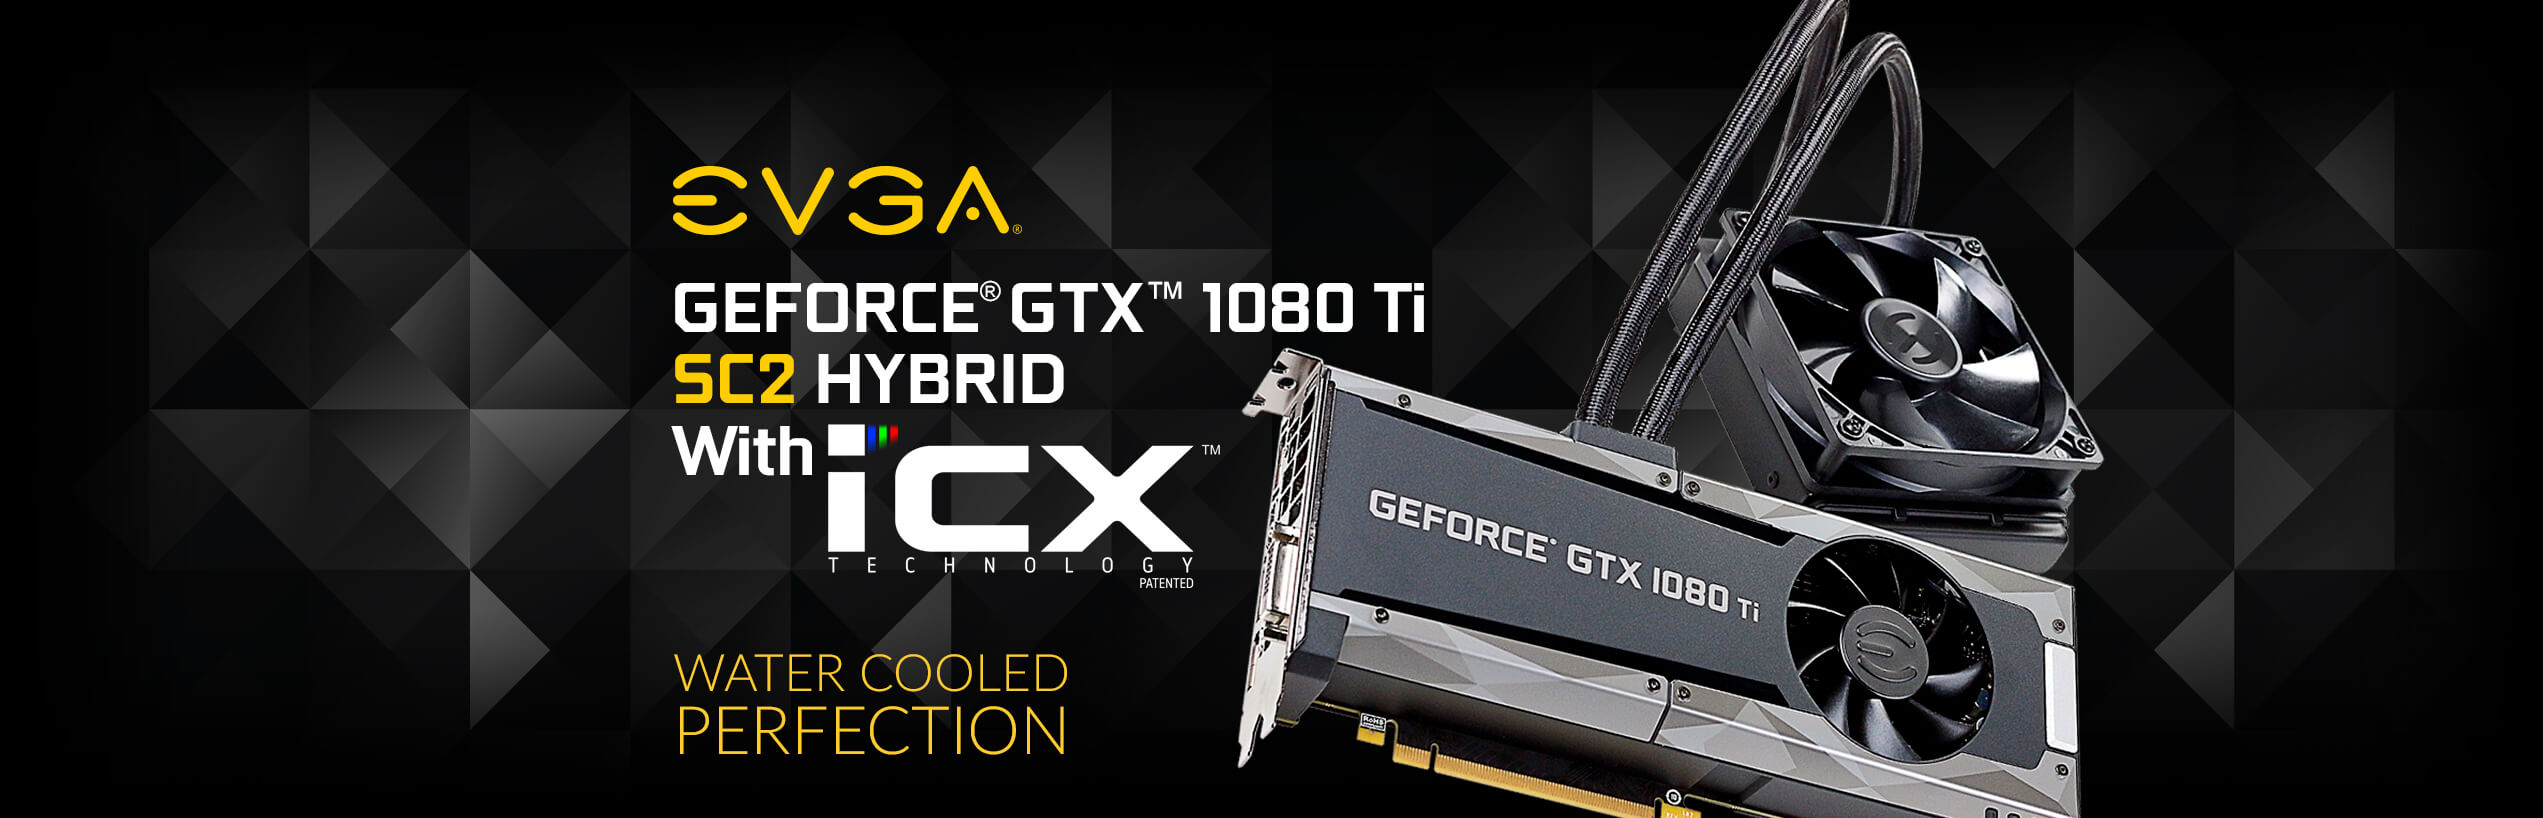 EVGA GeForce GTX 1080 Ti SC2 HYBRID